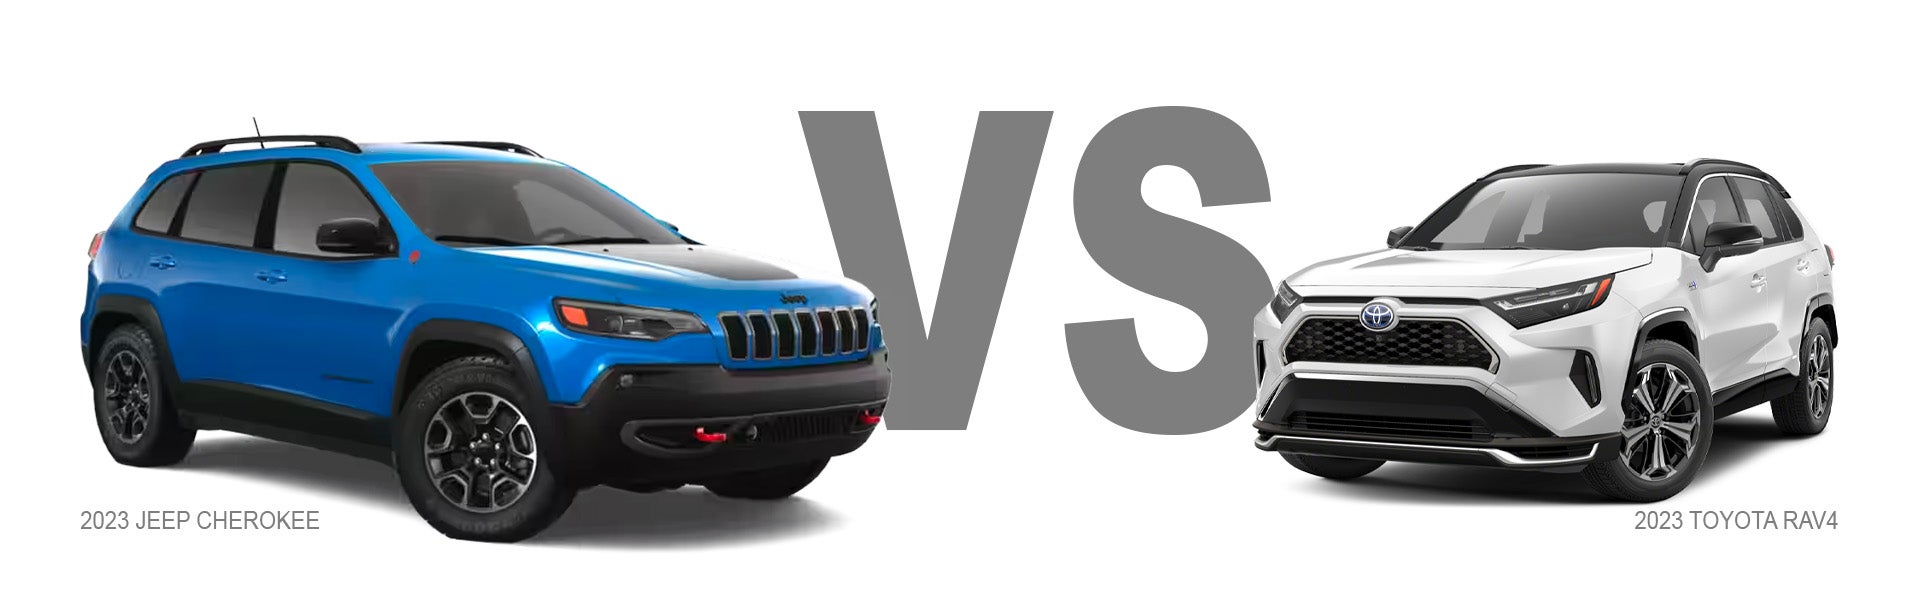 2023 Jeep Cherokee versus Toyota RAV 4 Comparison